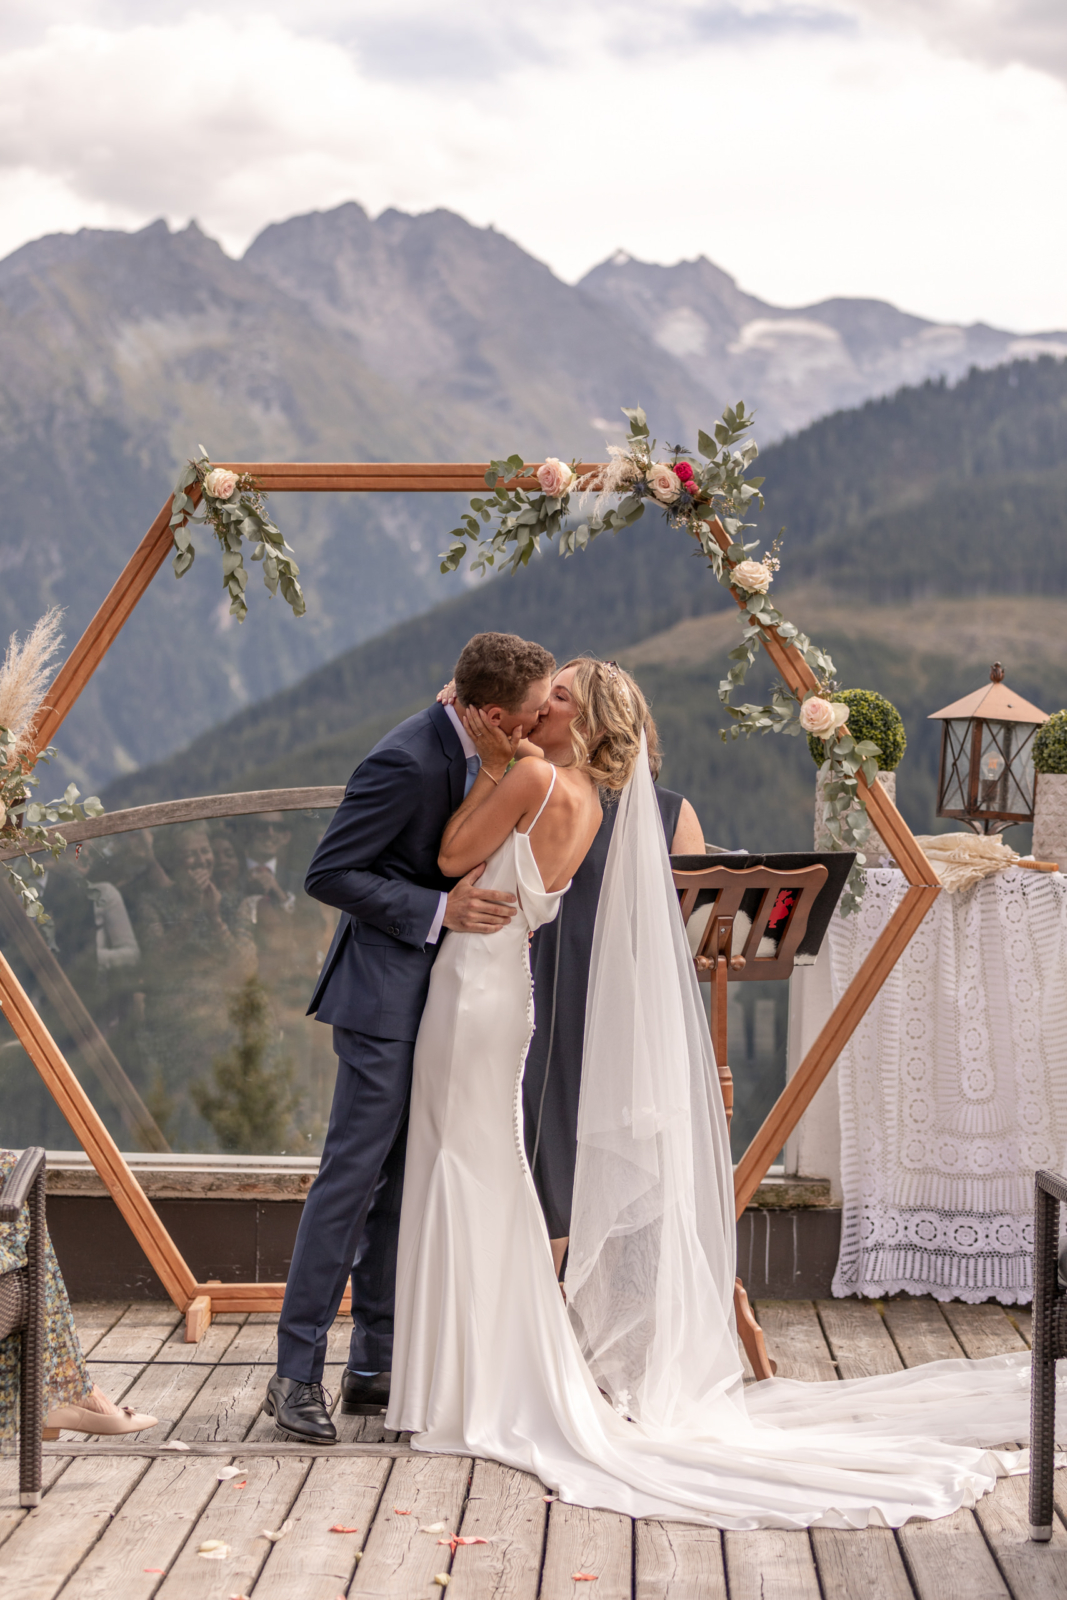 beautiful destination wedding in the mountains in Austria